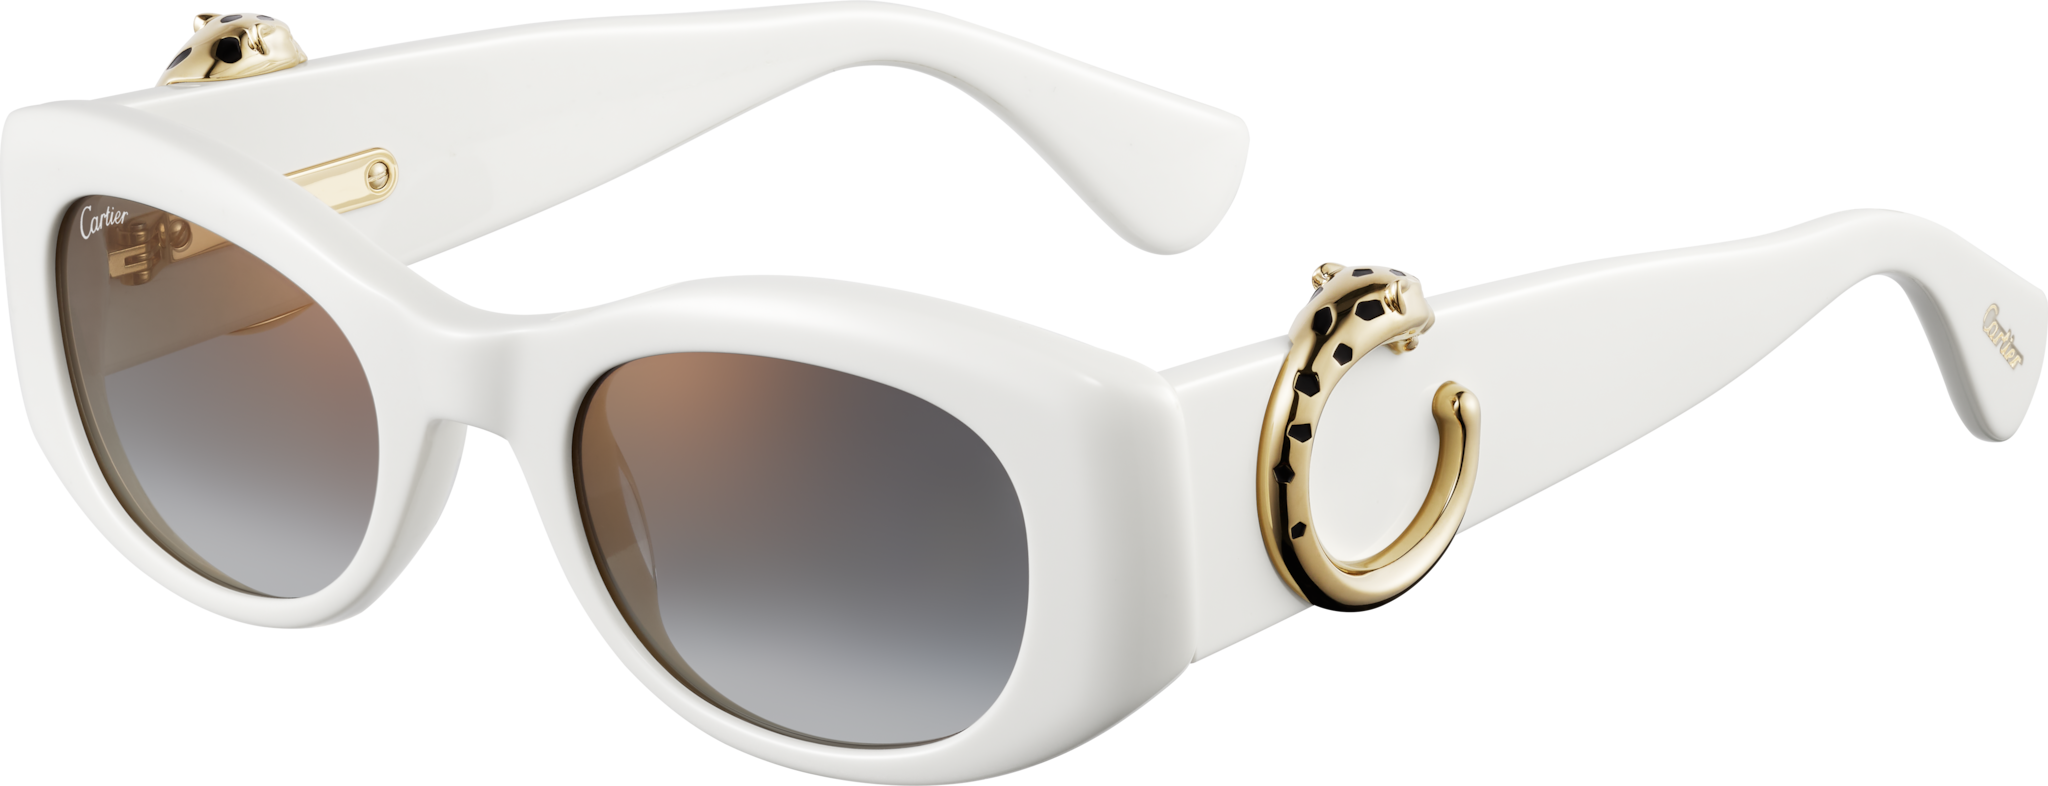 Panthère de Cartier SunglassesWhite acetate, grey lenses